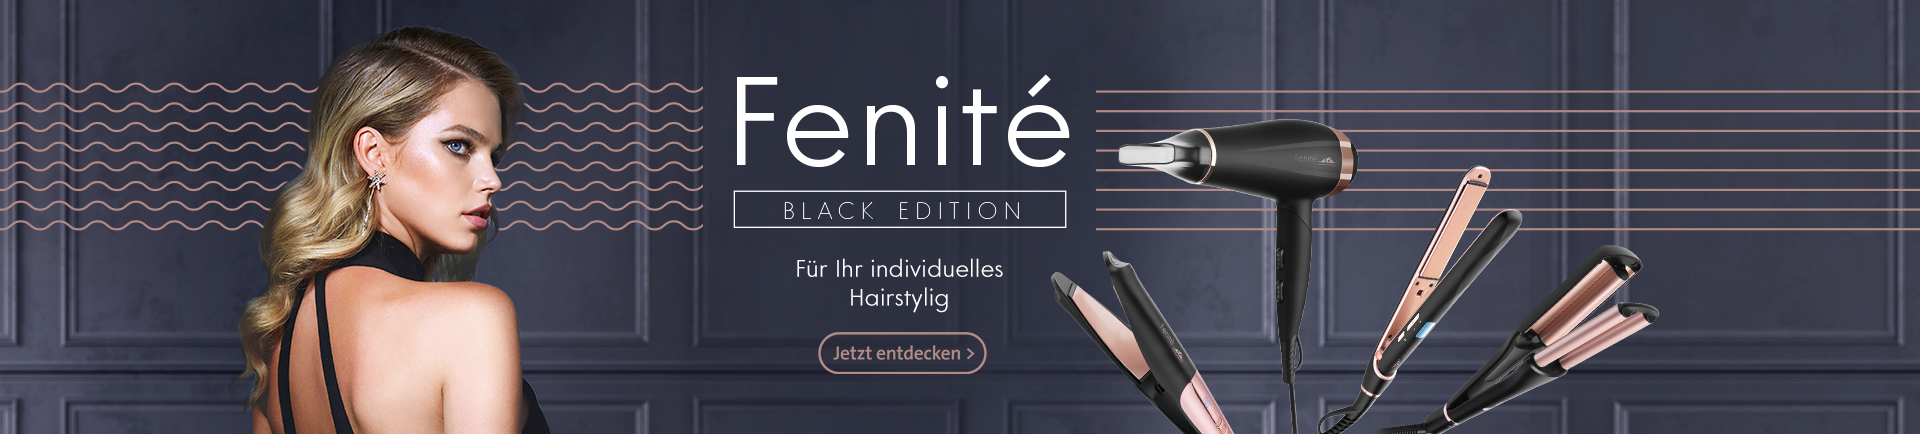 Fenite Black